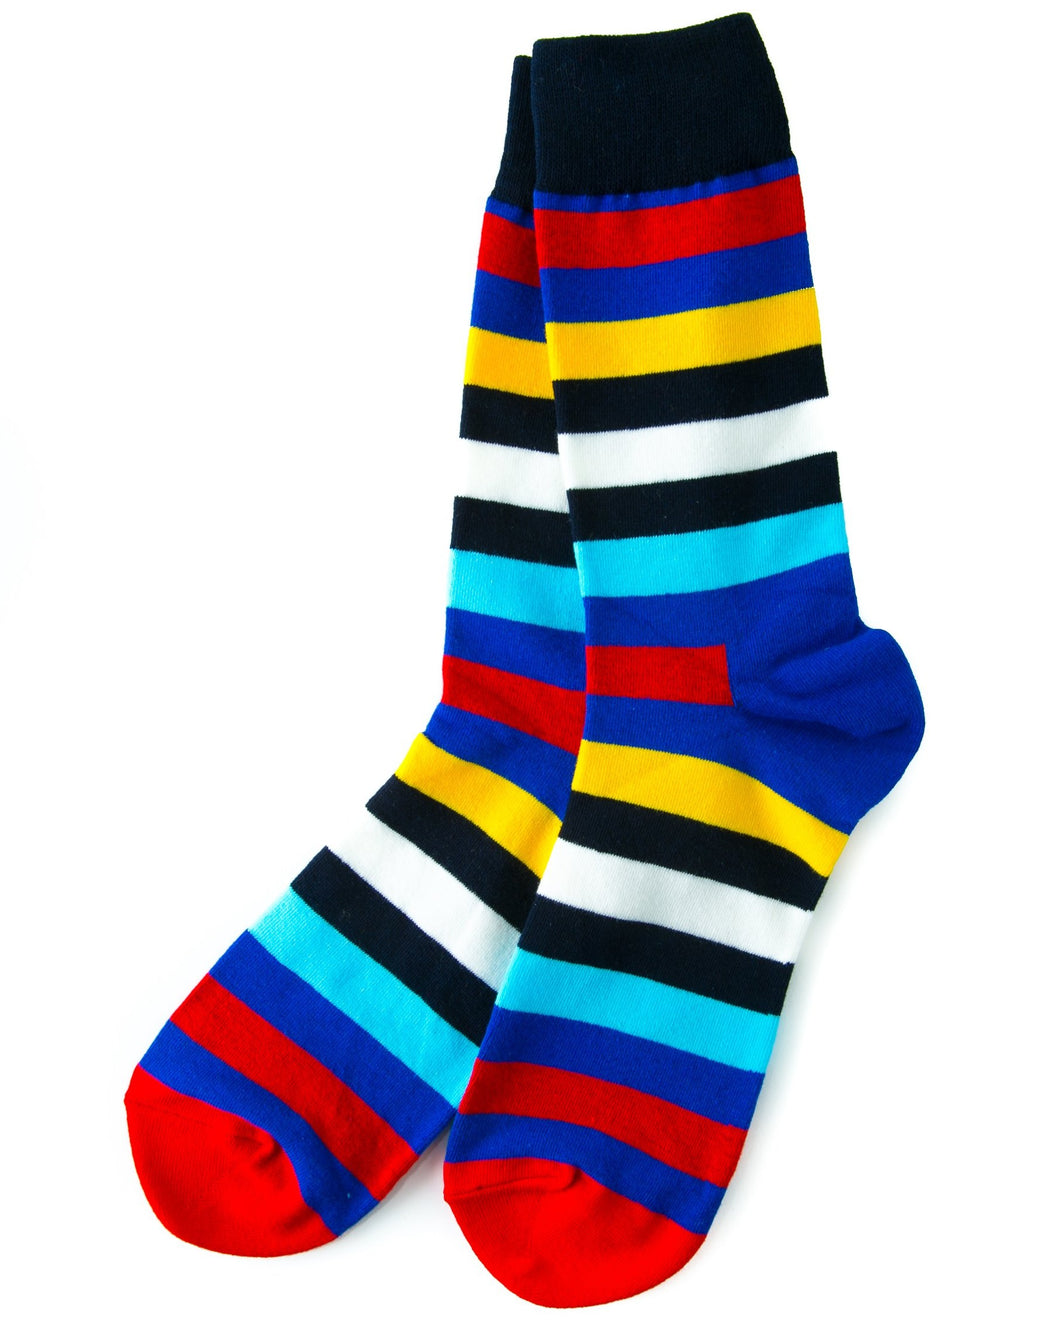 schoolboy stripes socks